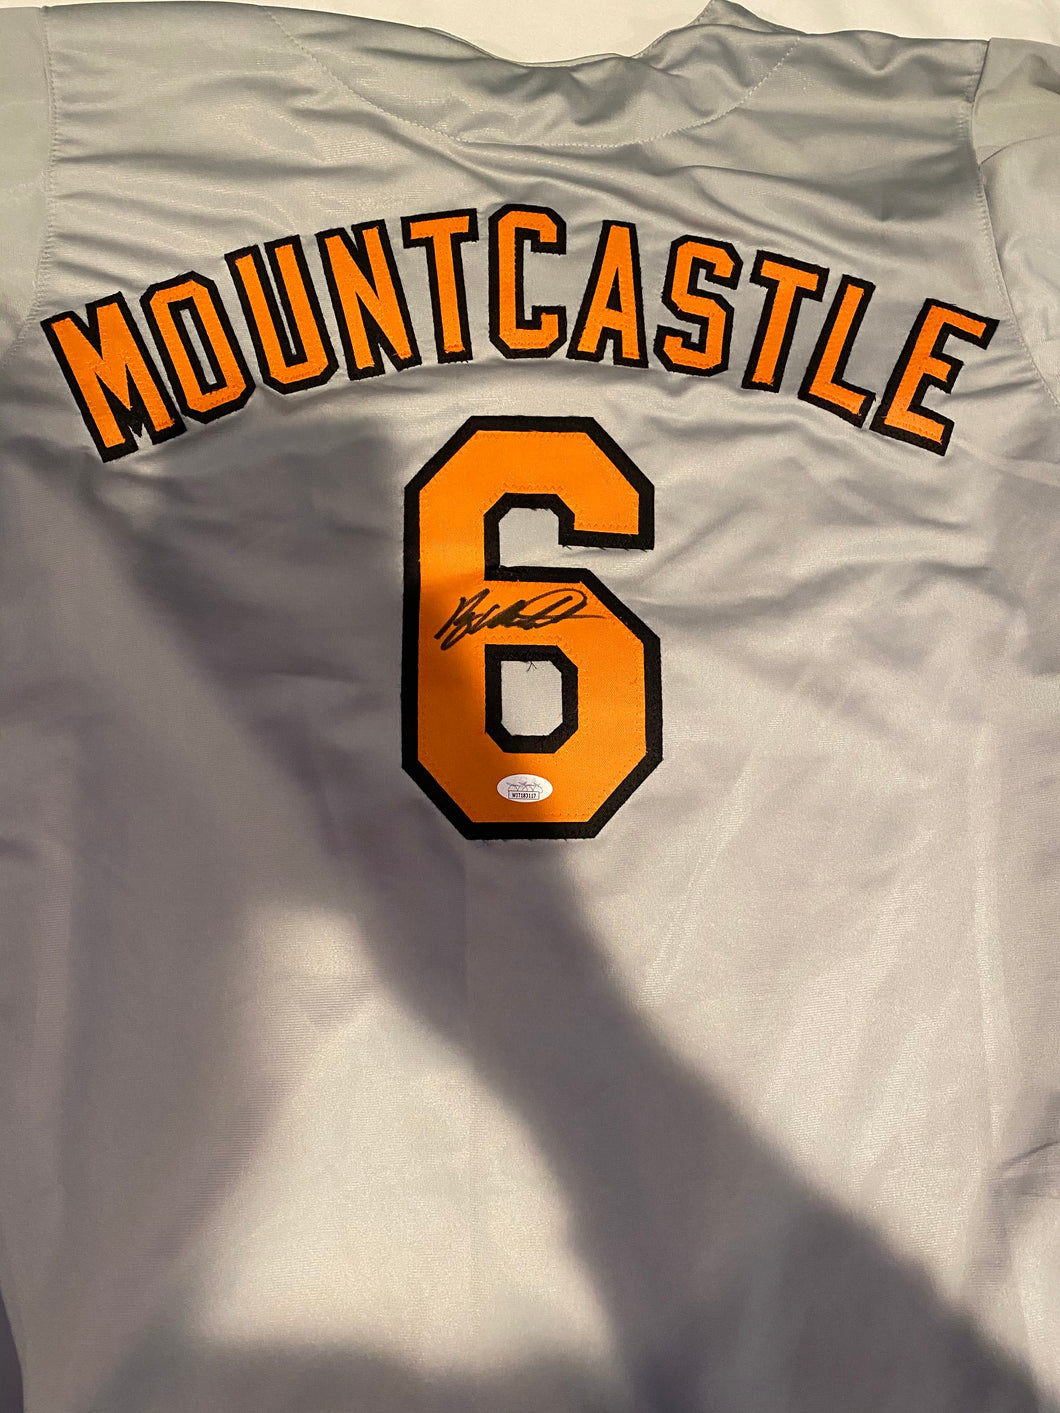 Ryan Mountcastle signed jersey